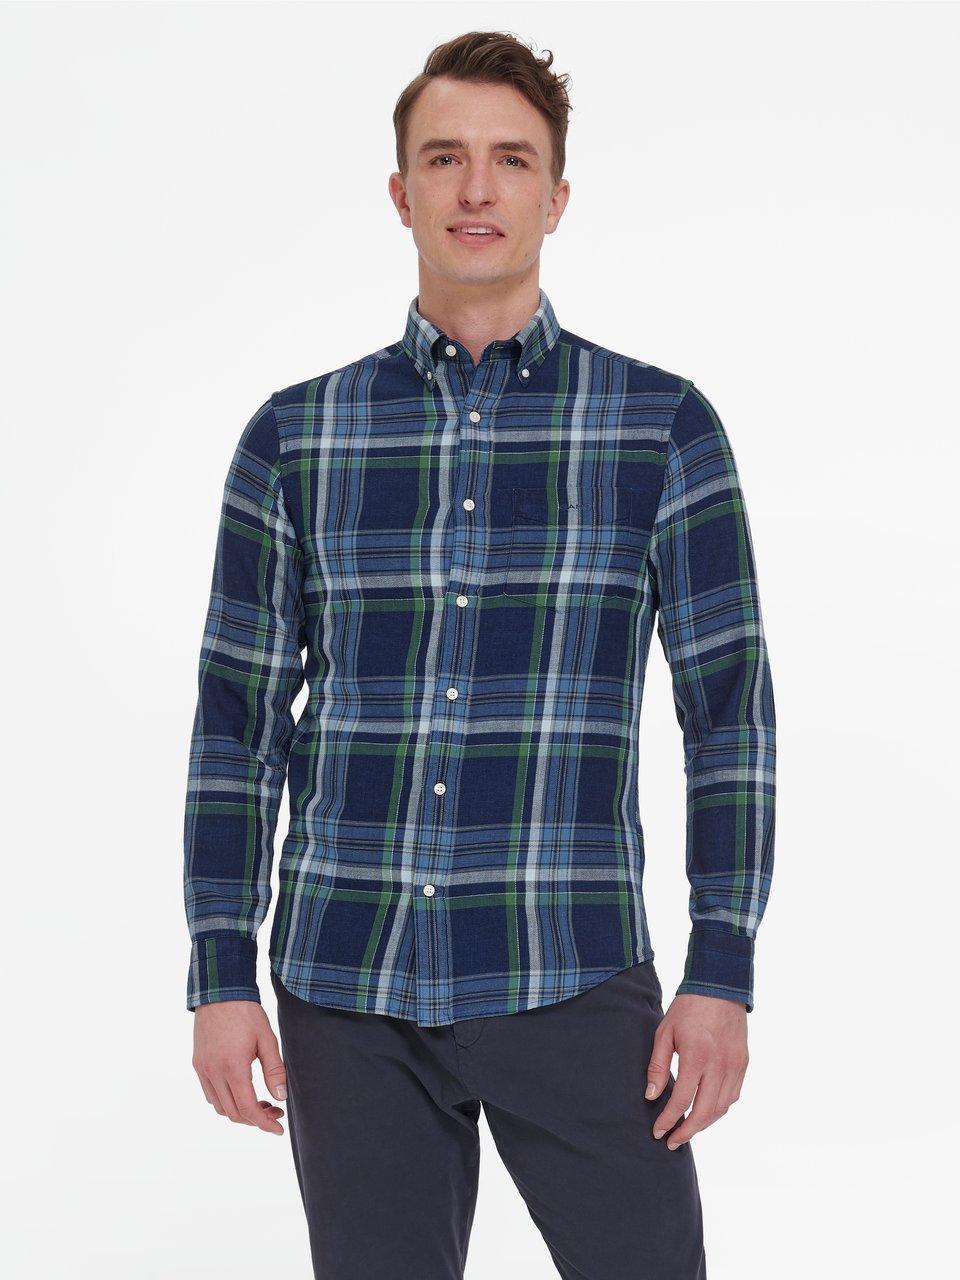 GANT - La chemise « Reg indigo Twill Check Shirt »